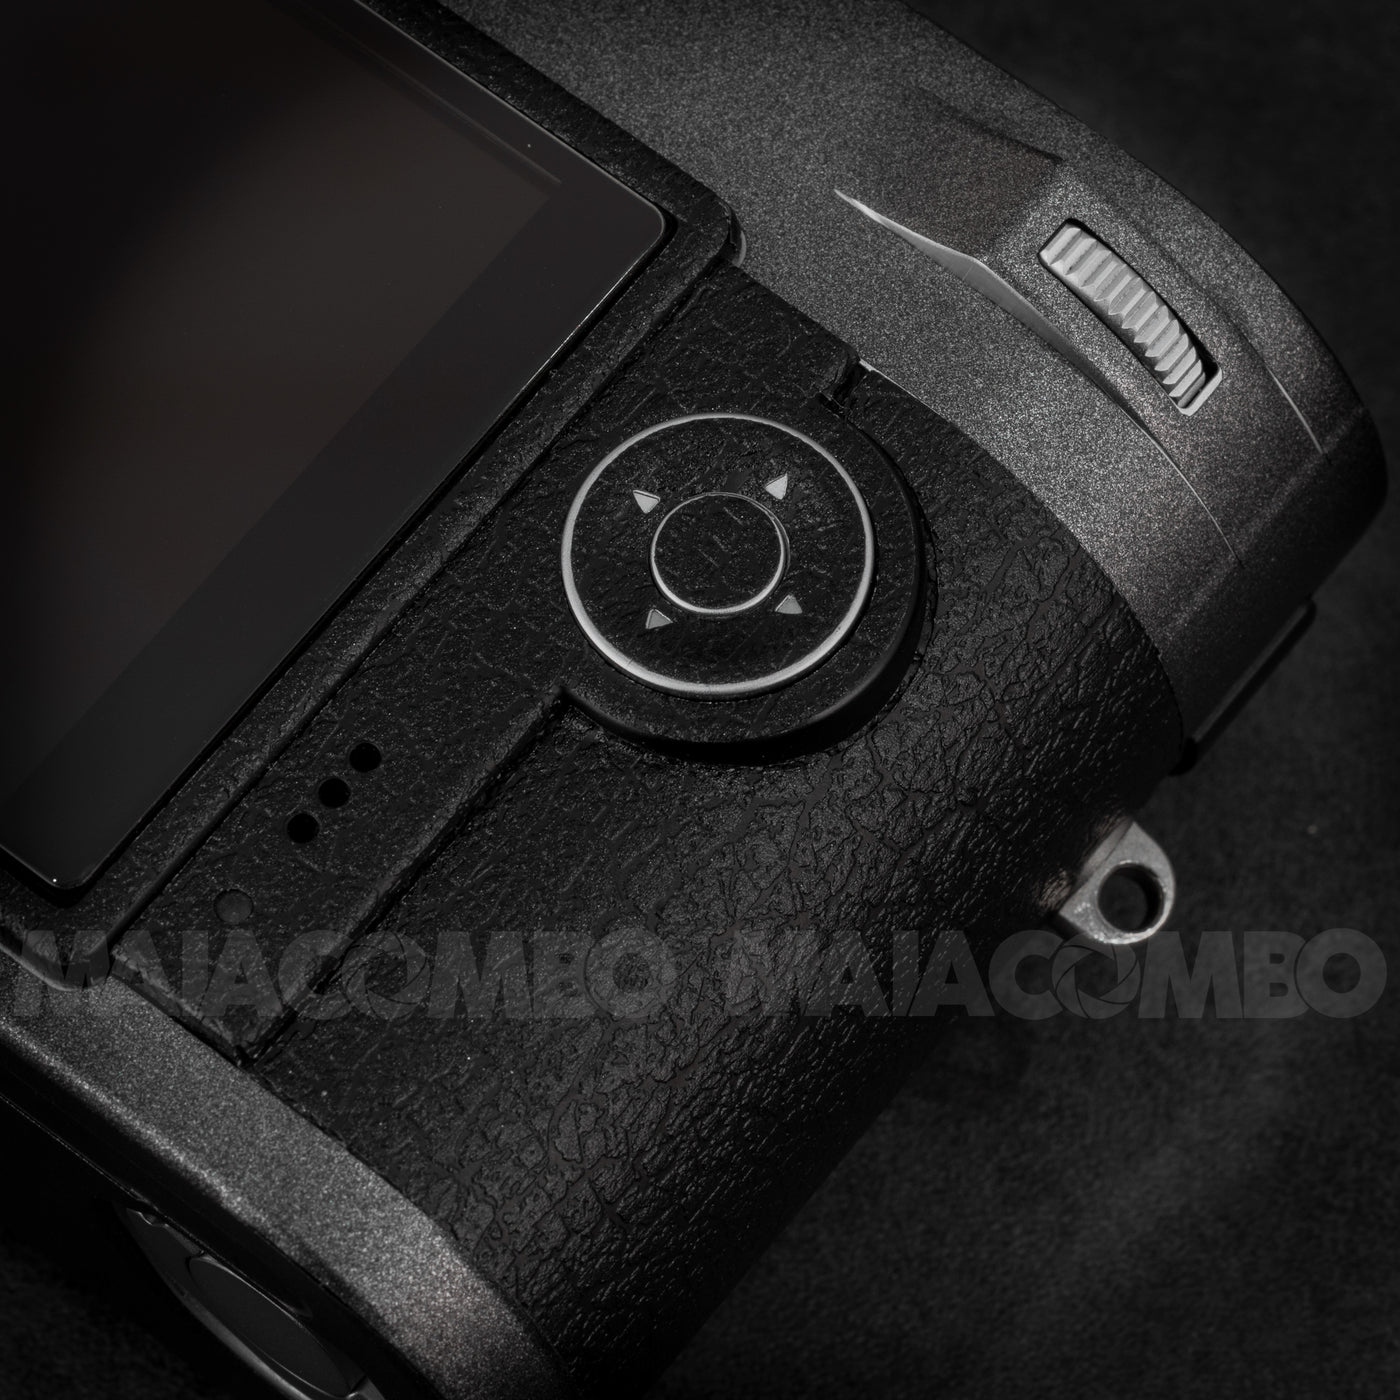 Leica M240 Camera Skin/ Wrap